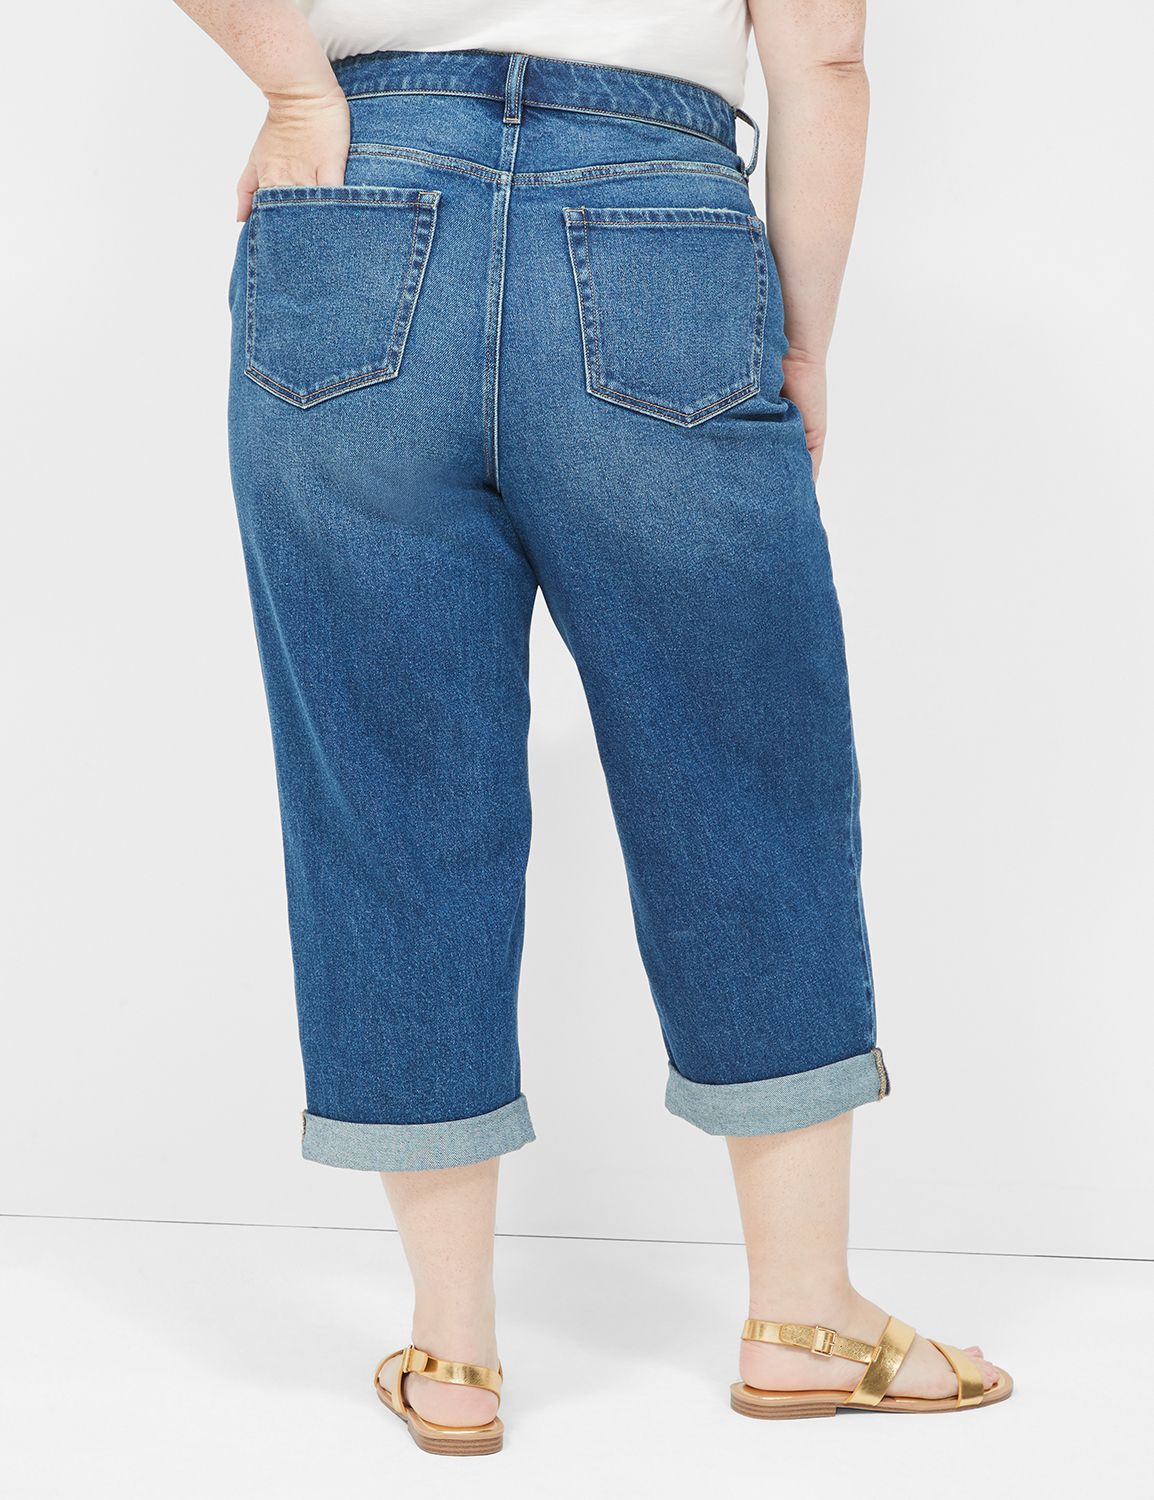 Seven7 Jeans Size 10 Womens Medium Wash Denim Distressed Capris 26 length